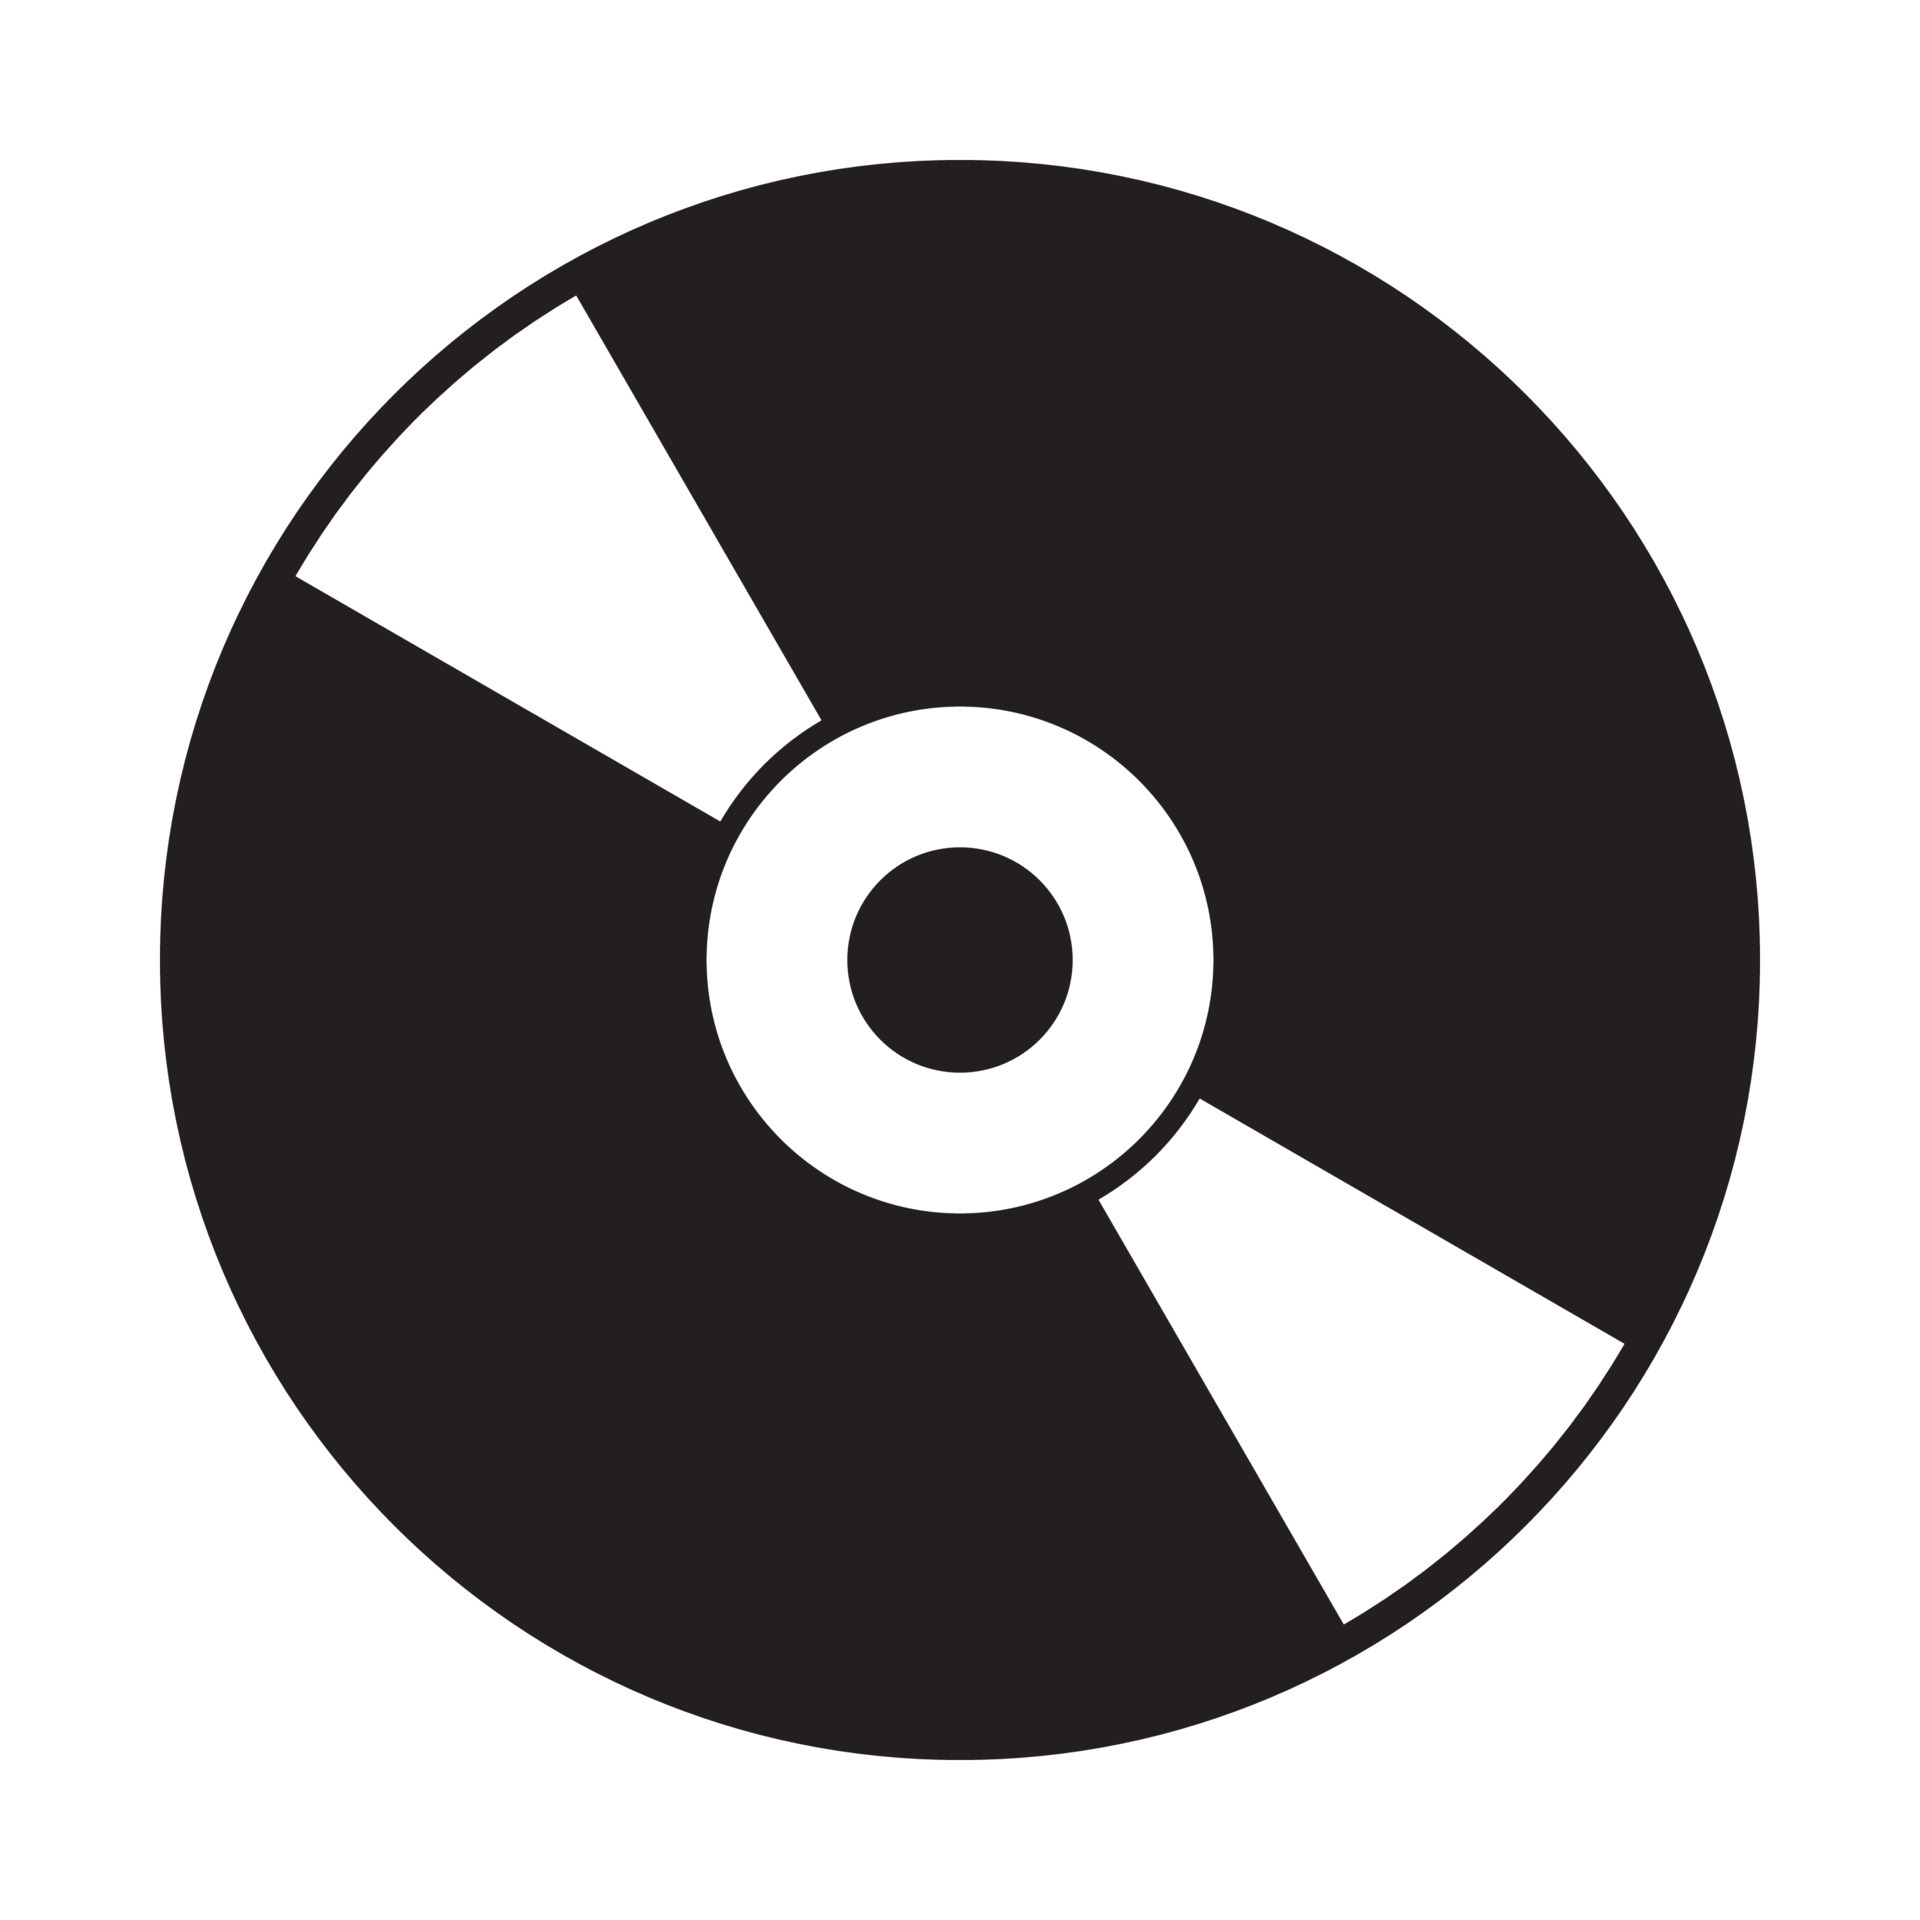 Compact disc icon vector cd symbol for graphic design, logo